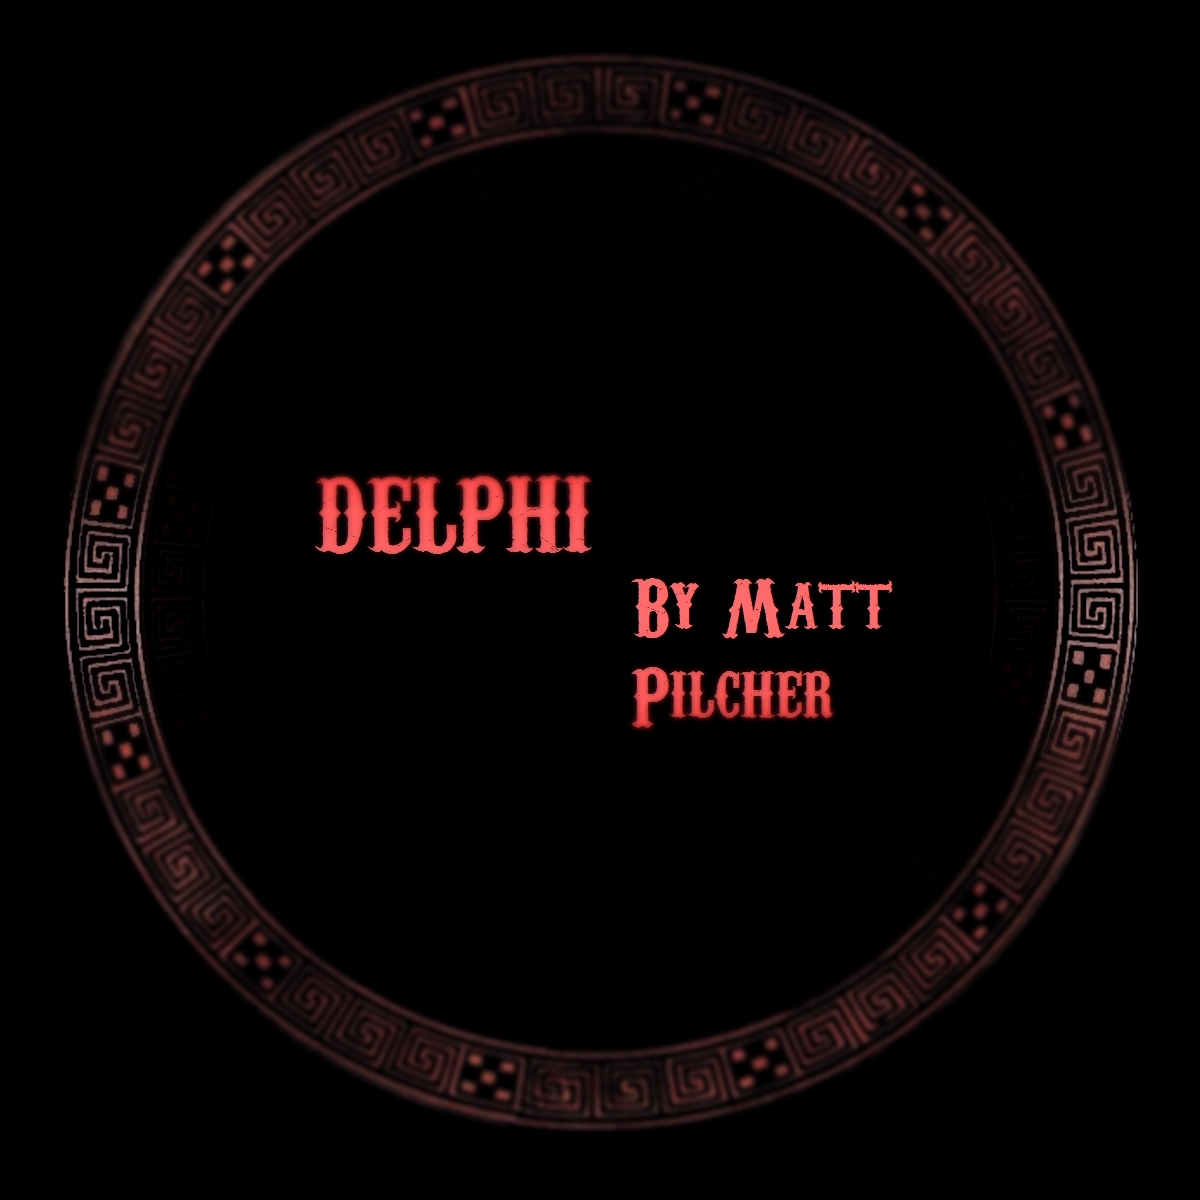 Matt Pilcher - DELPHI